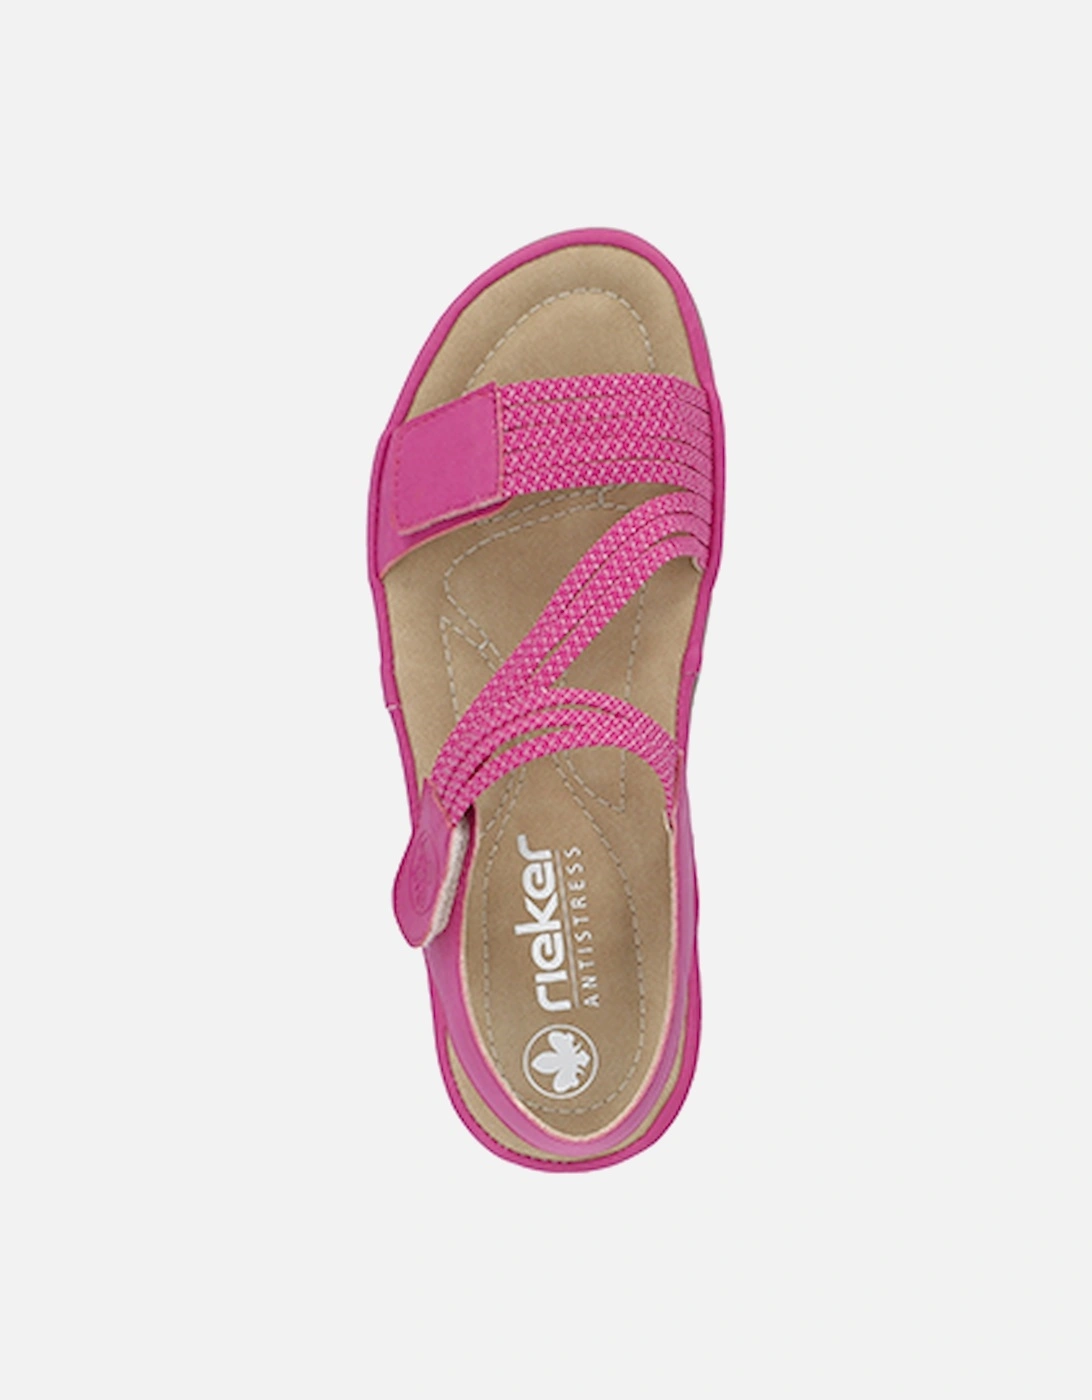 64870-31 Women's Shoe Pink